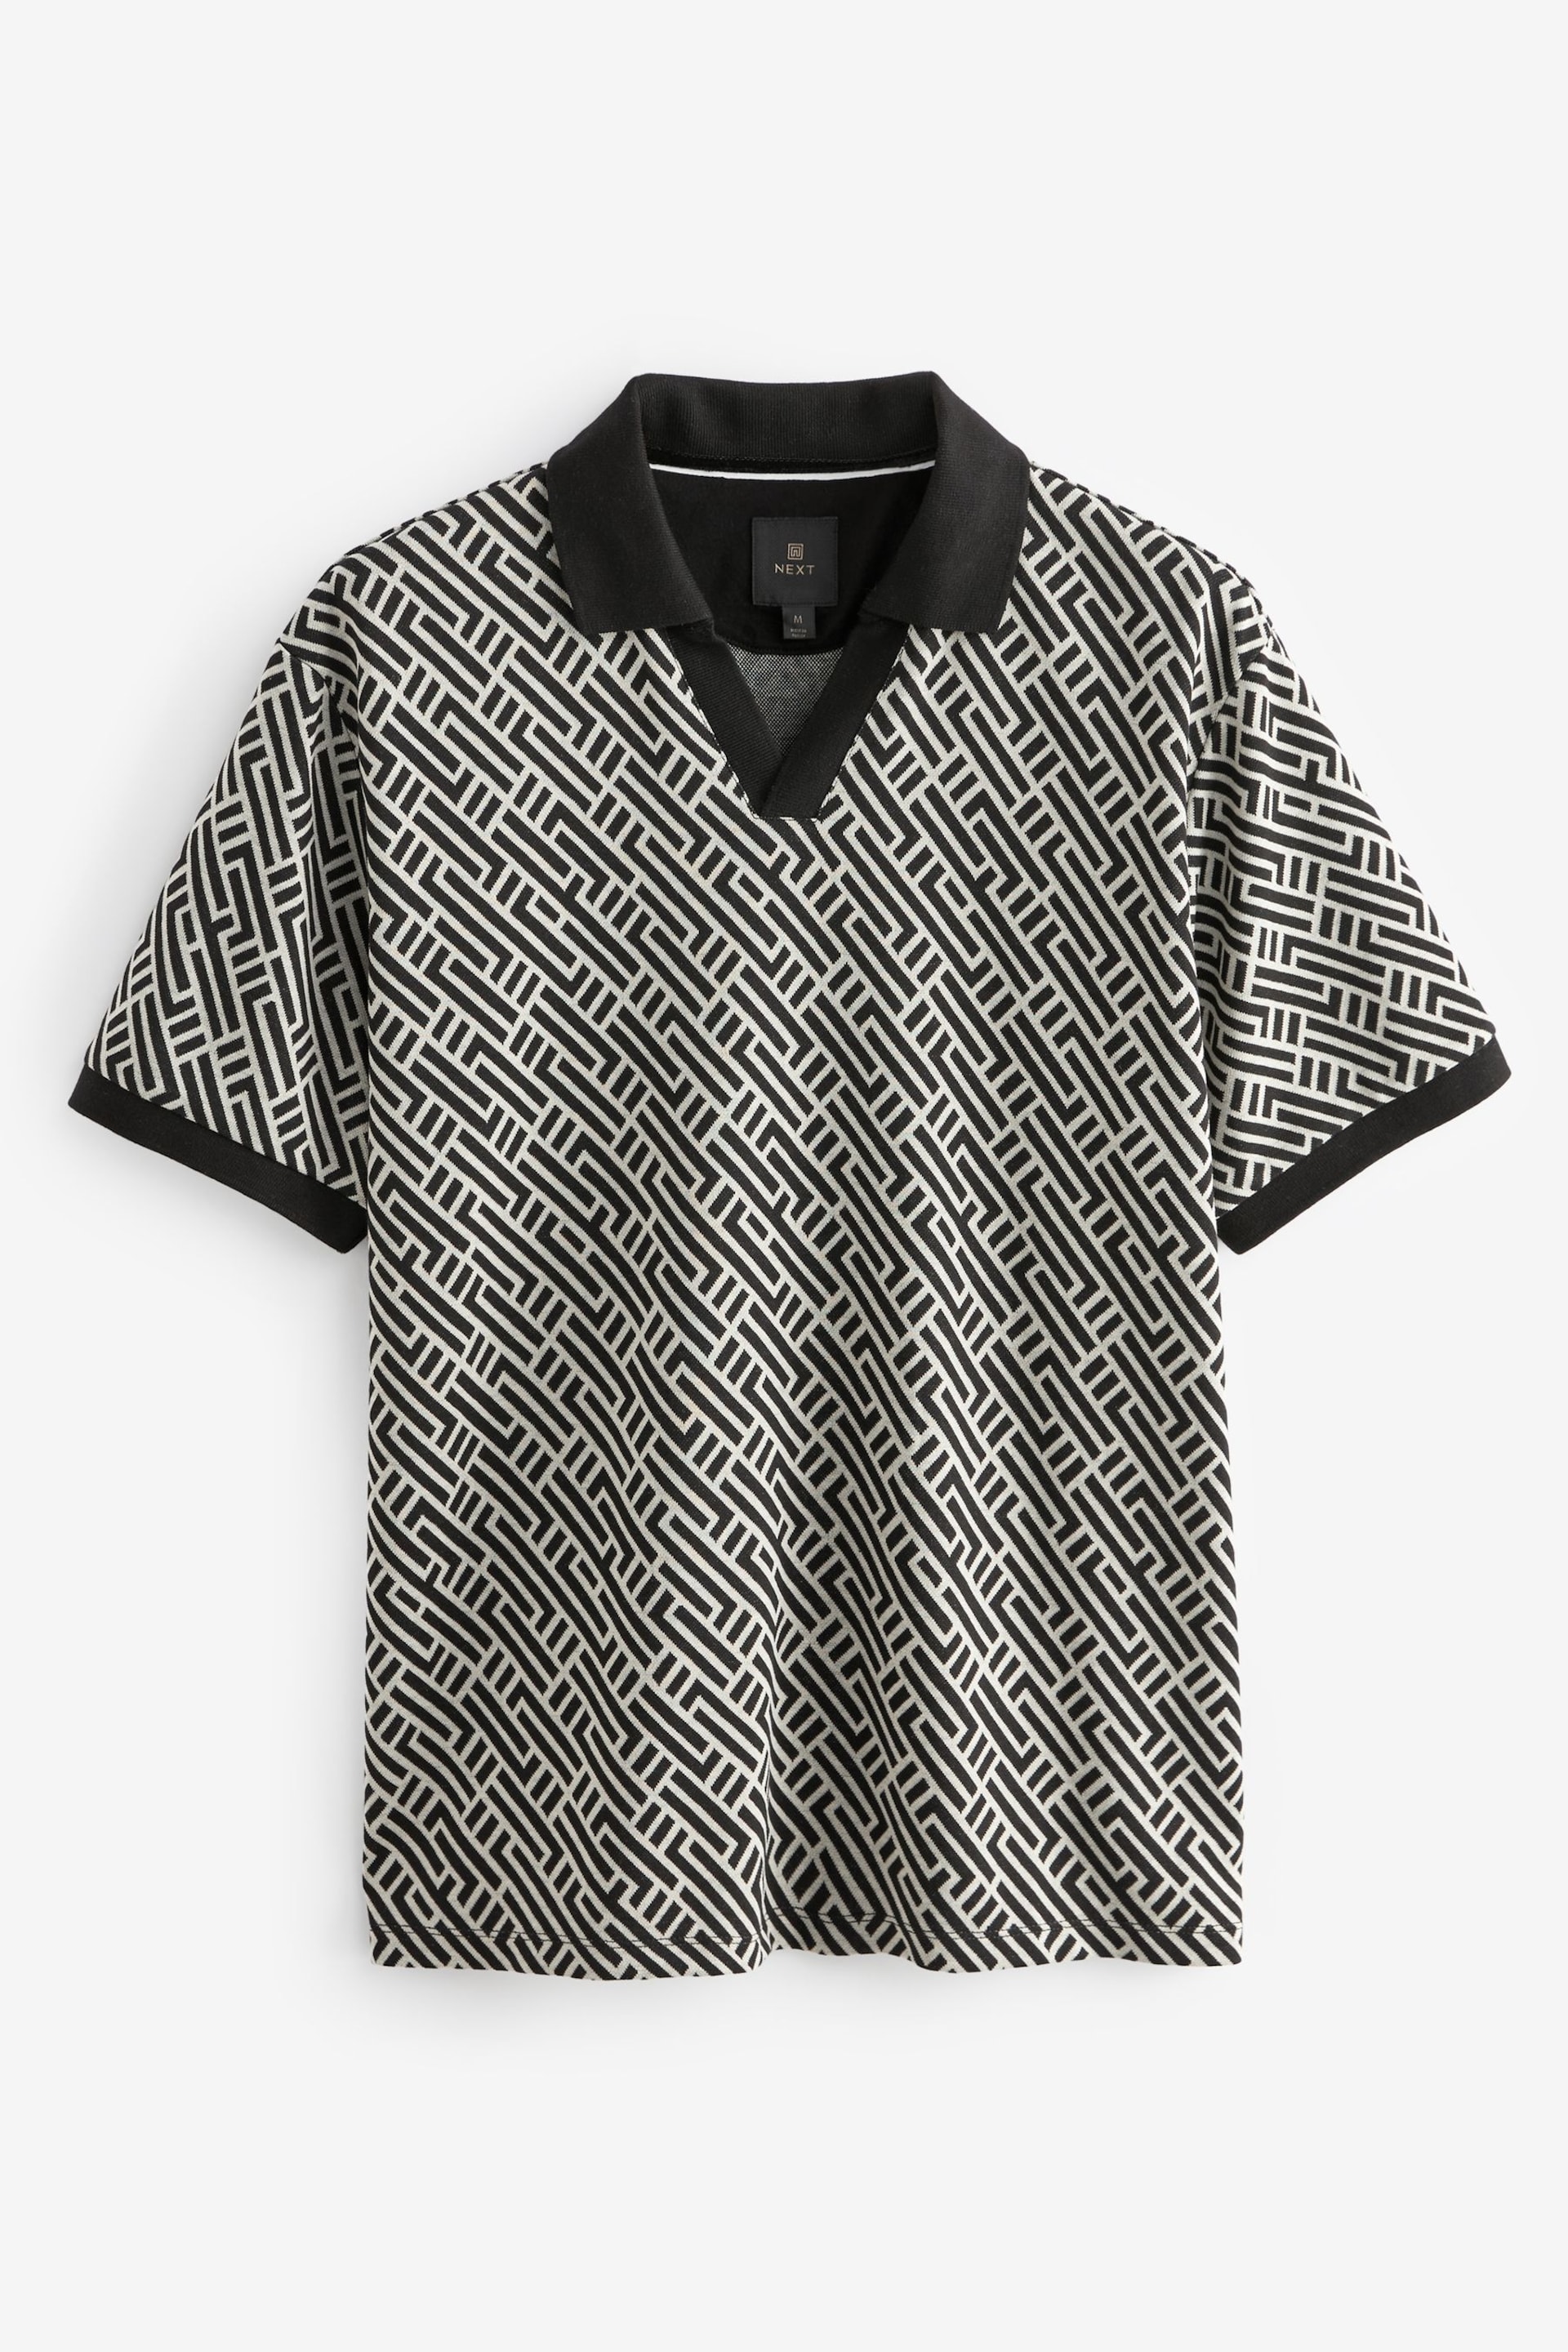 Black/White Cuban Collar Pattern Polo Shirt - Image 6 of 8